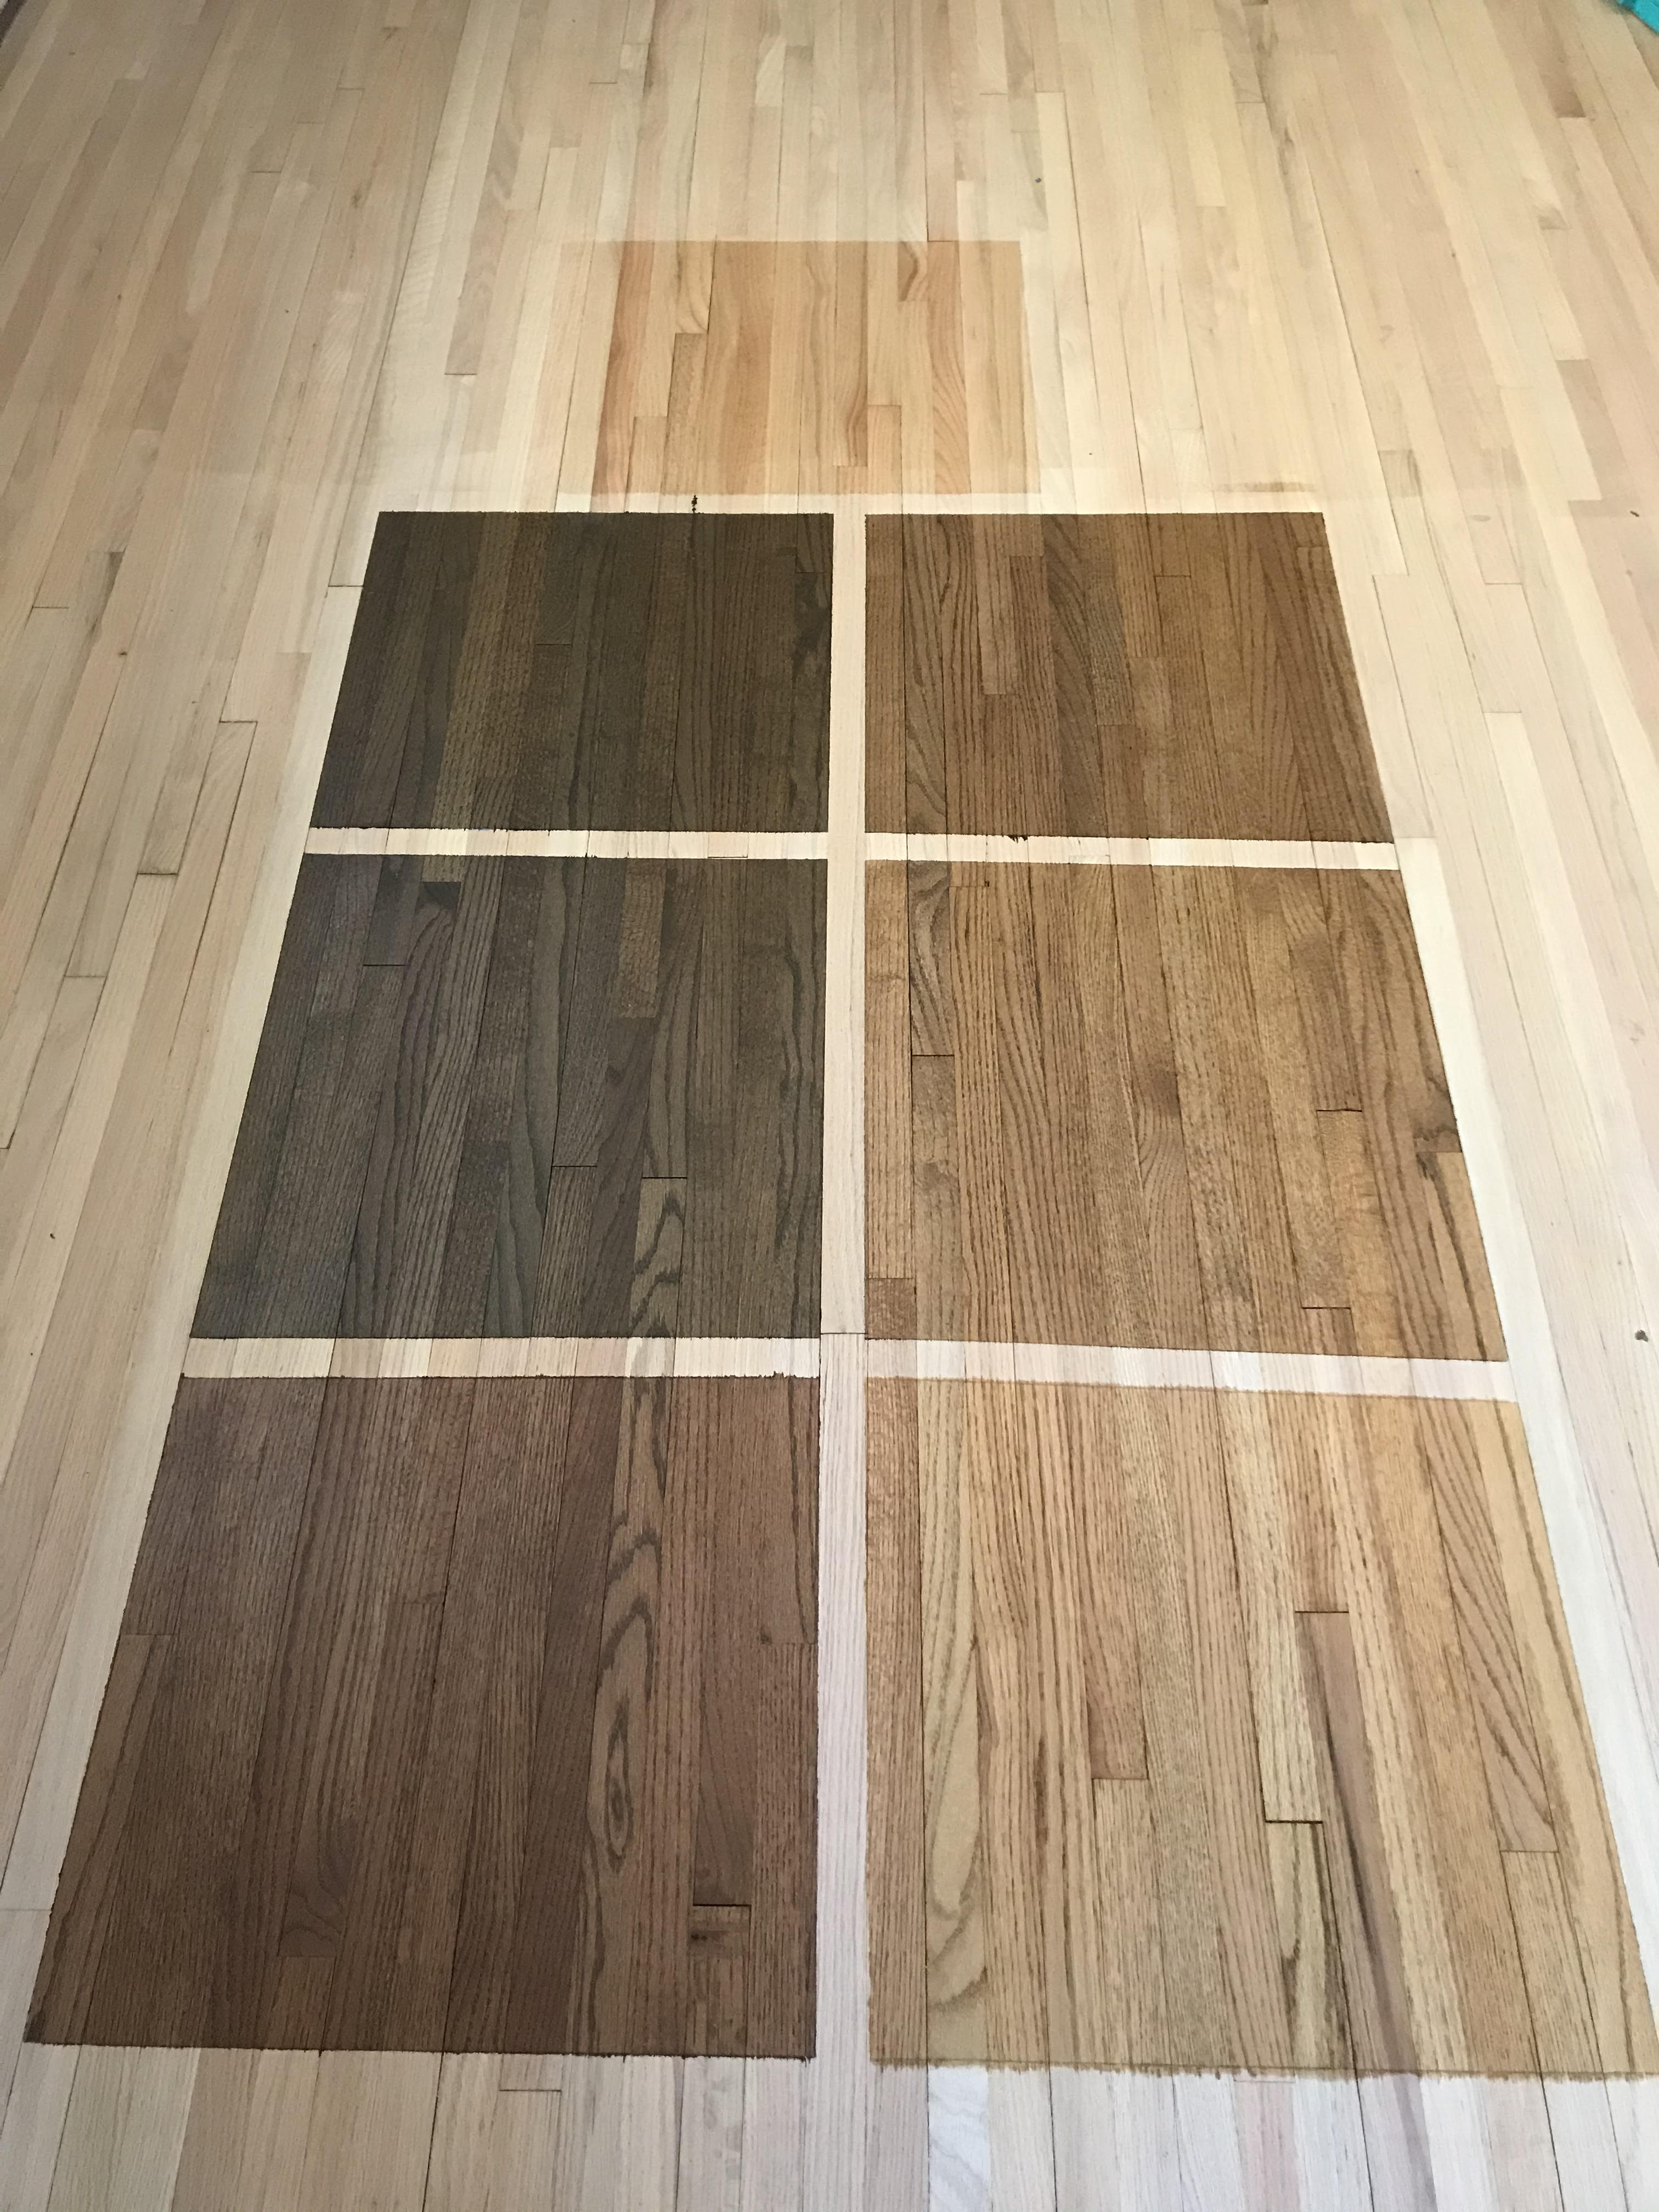 Hardwood Floor Refinishing Ub, Refinishing And Staining Hardwood Floors